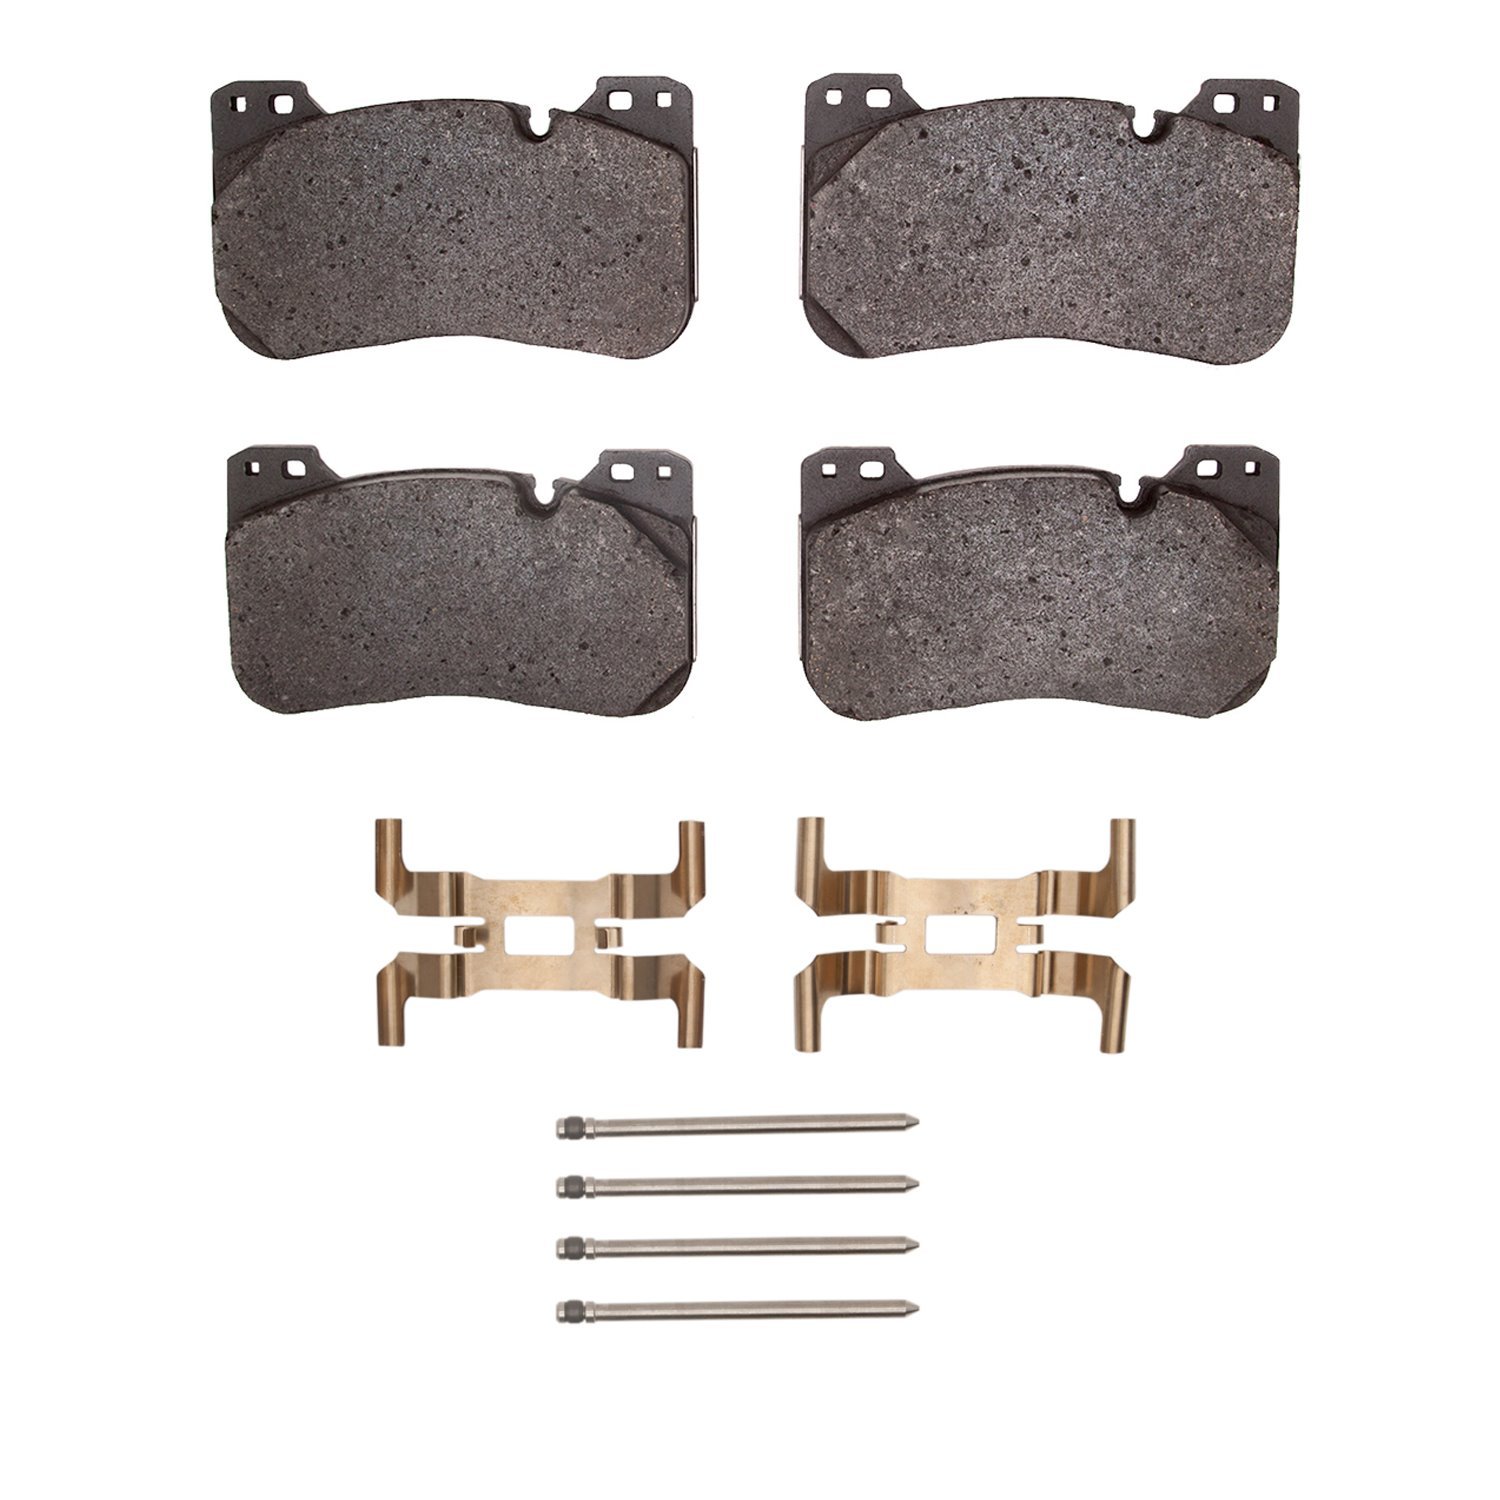 1310-2155-01 3000-Series Ceramic Brake Pads & Hardware Kit, Fits Select BMW, Position: Front